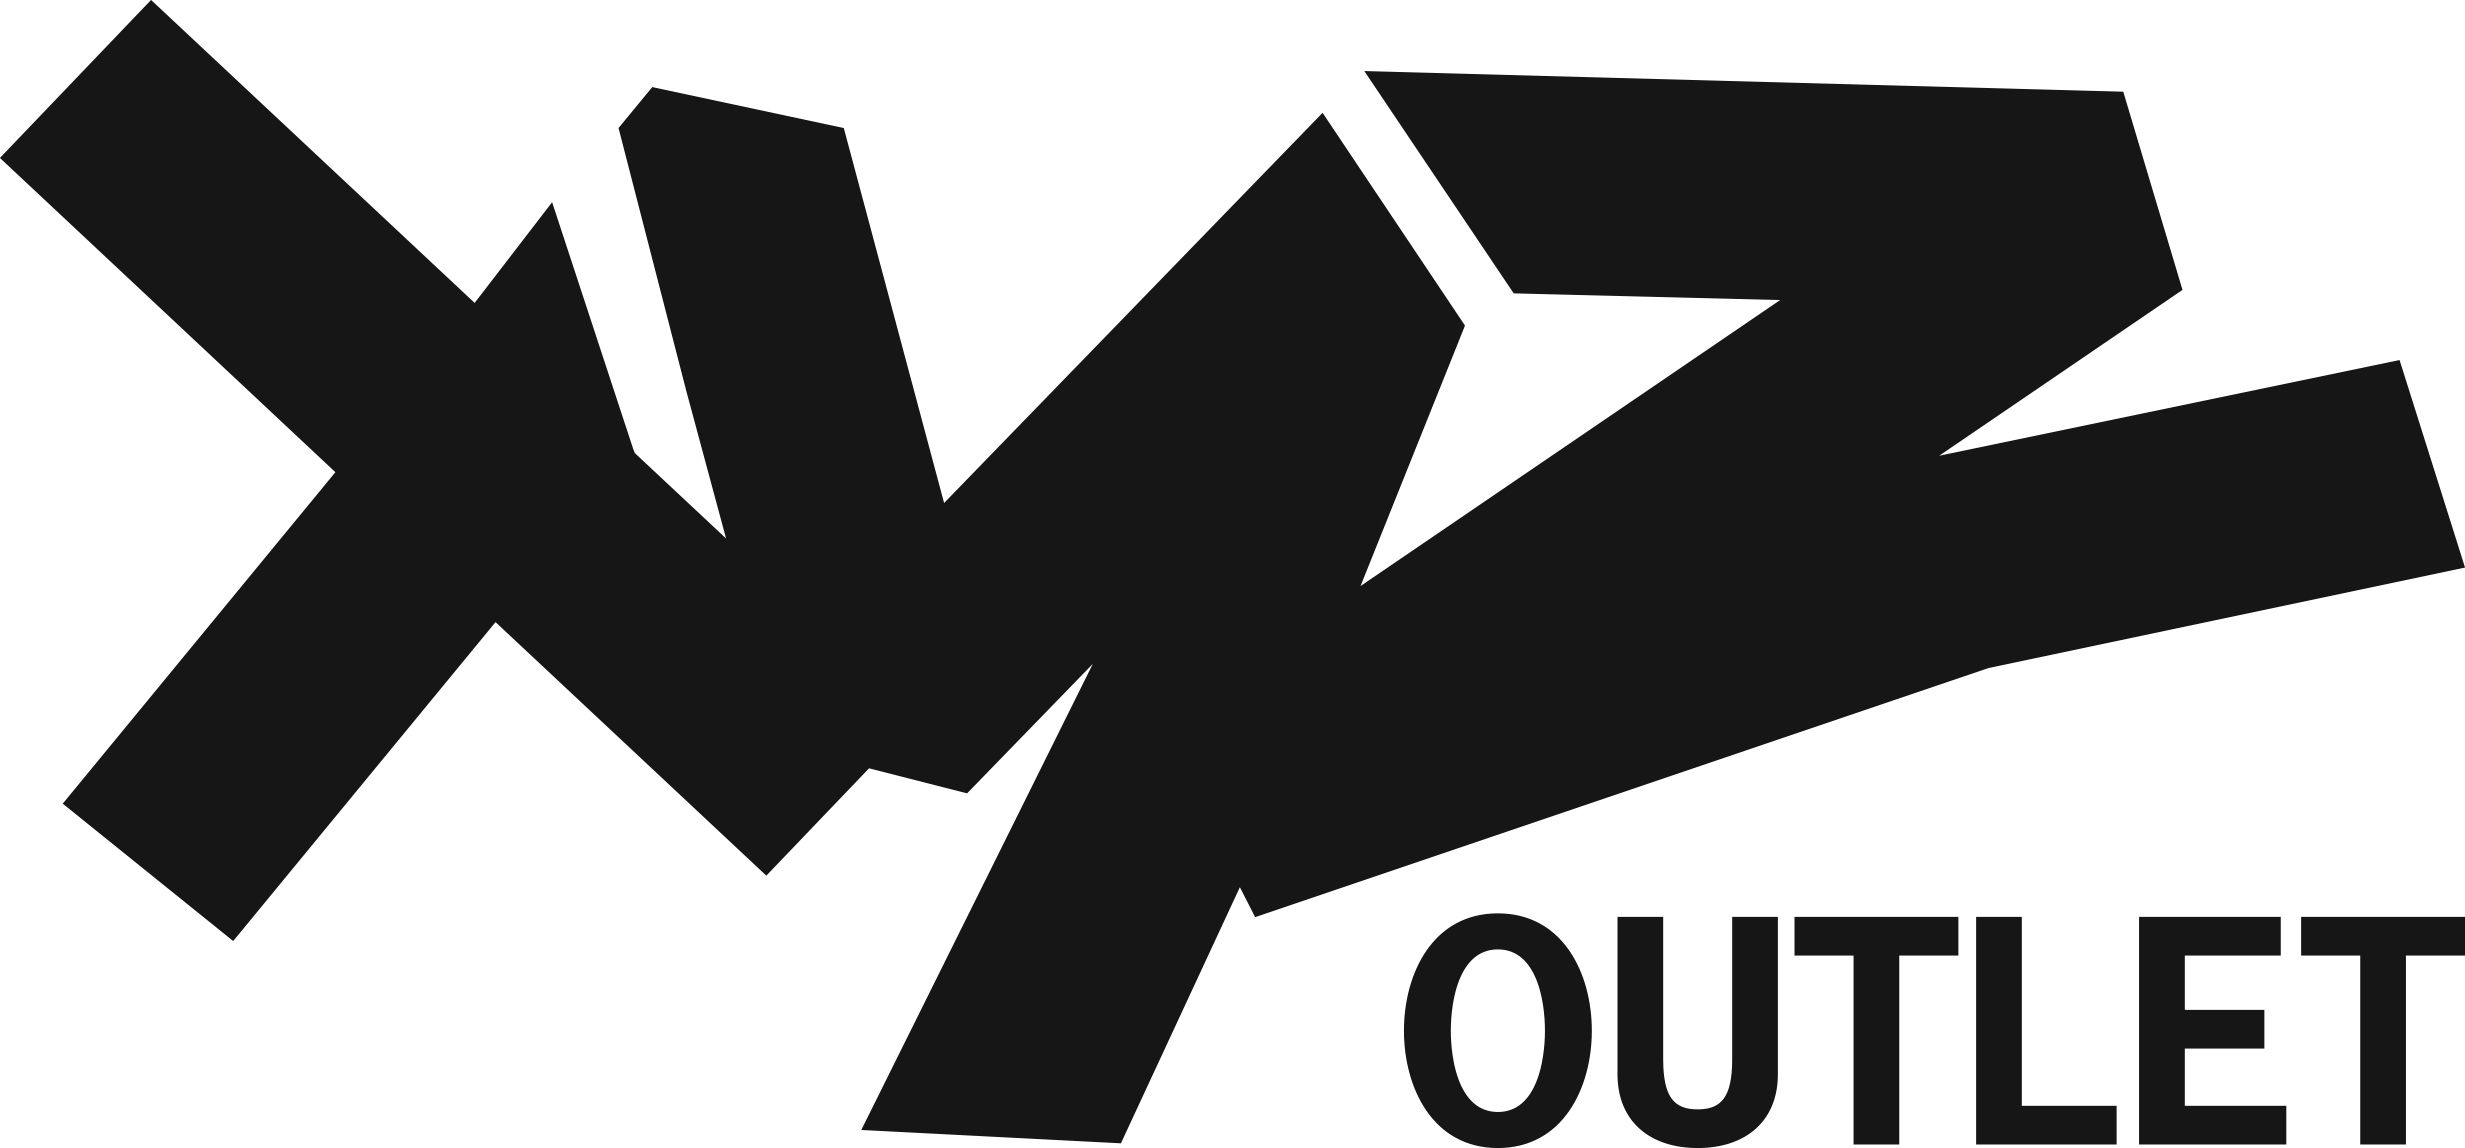 logo_XYZ_Outlet-crni.jpg